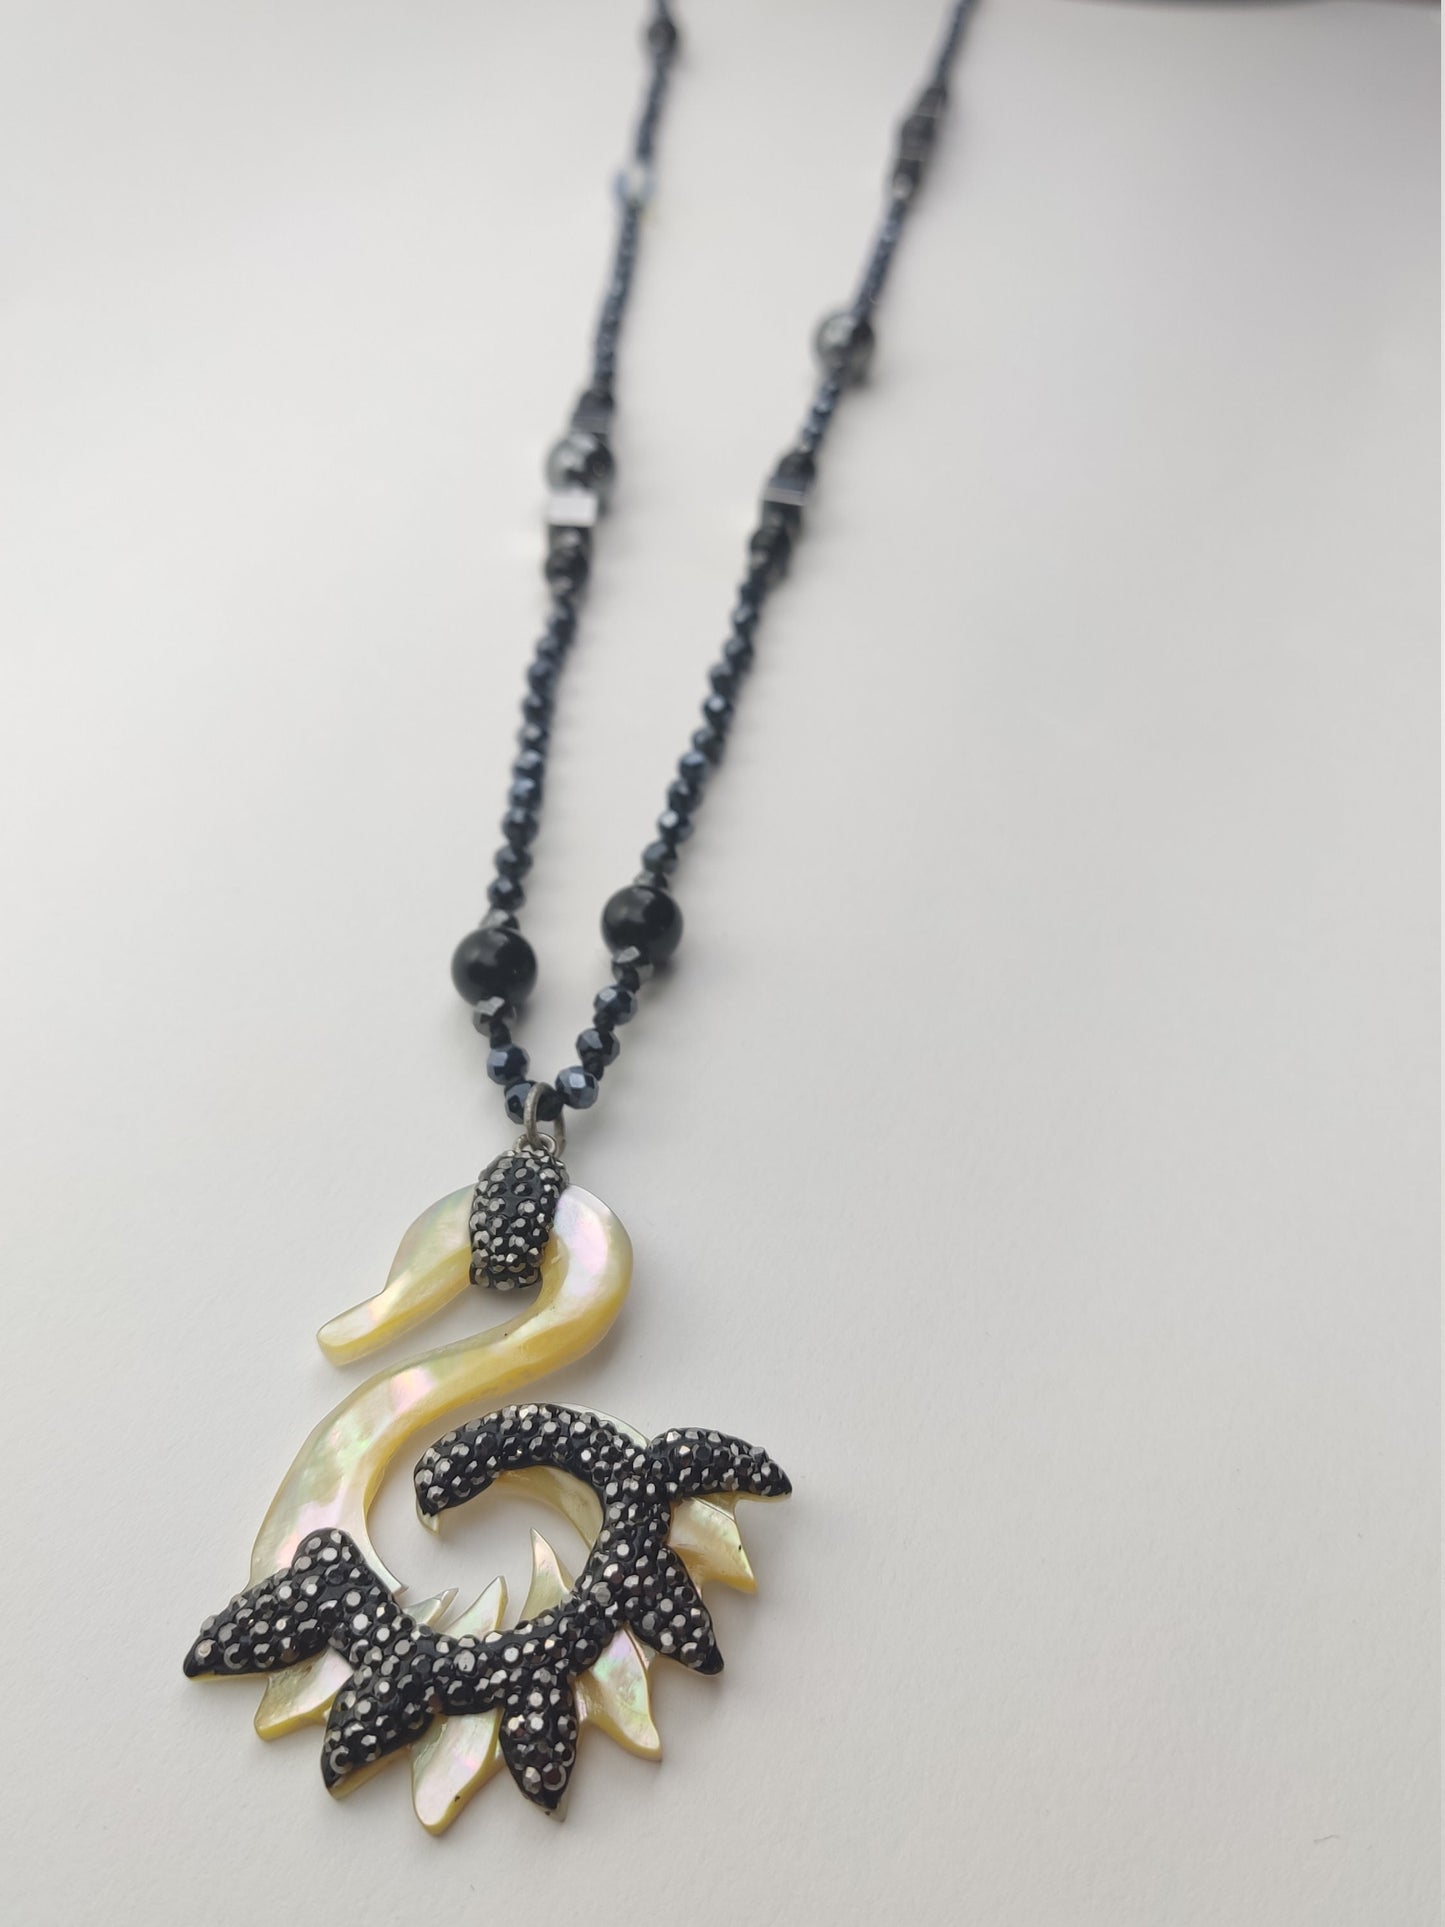 Long Semi Precious Stones Swan Necklace, Pendant With Marcasite - Mother Of Pearl, 70cm, Griechische Halskette Schmuck, Jewelry, Schmuck